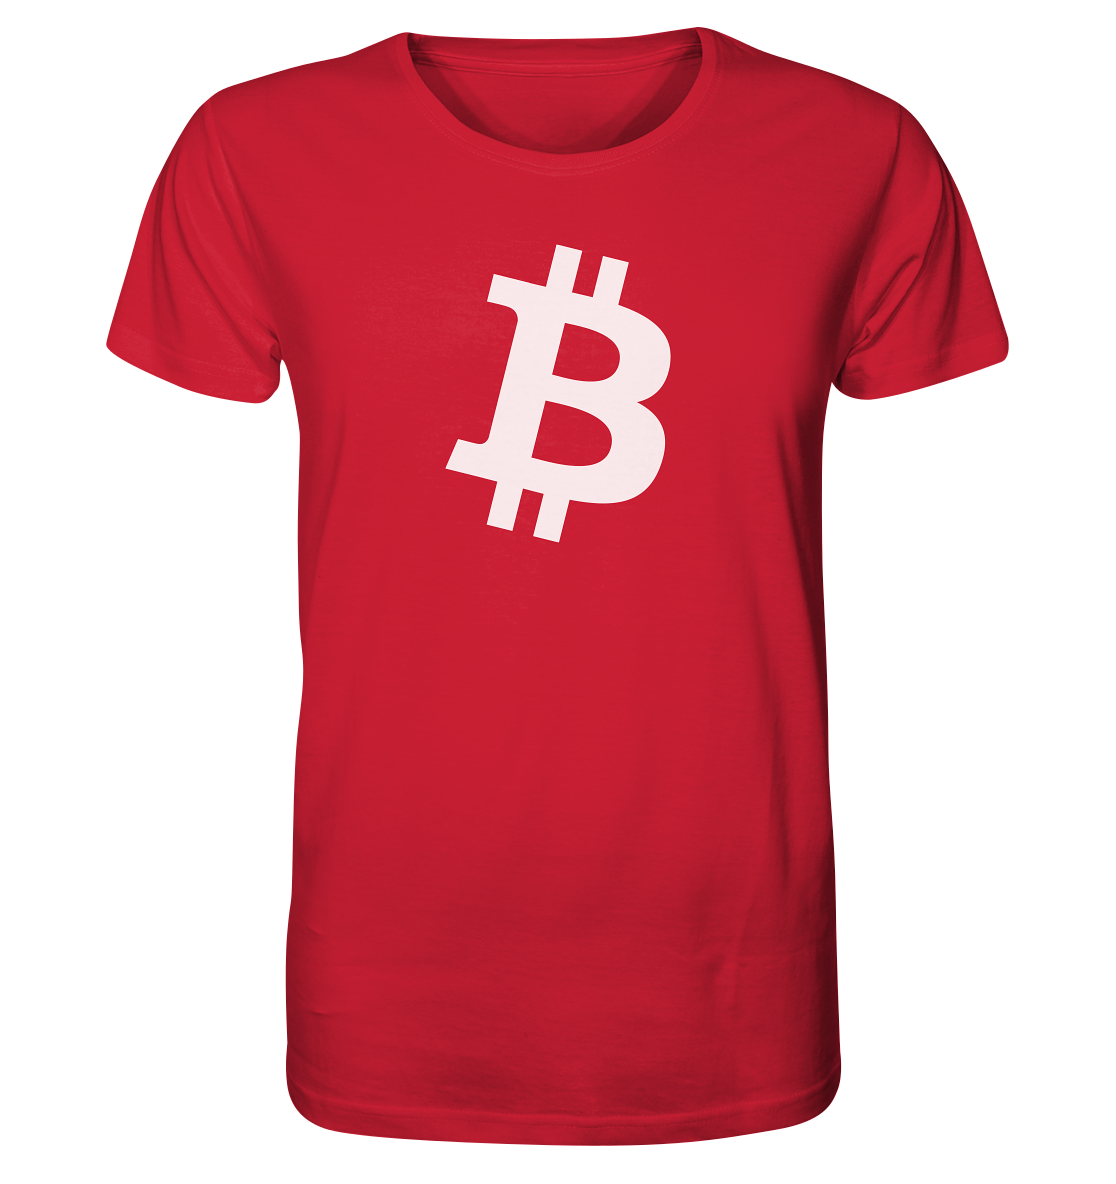 Bitcoin "simple B white" - Organic Shirt